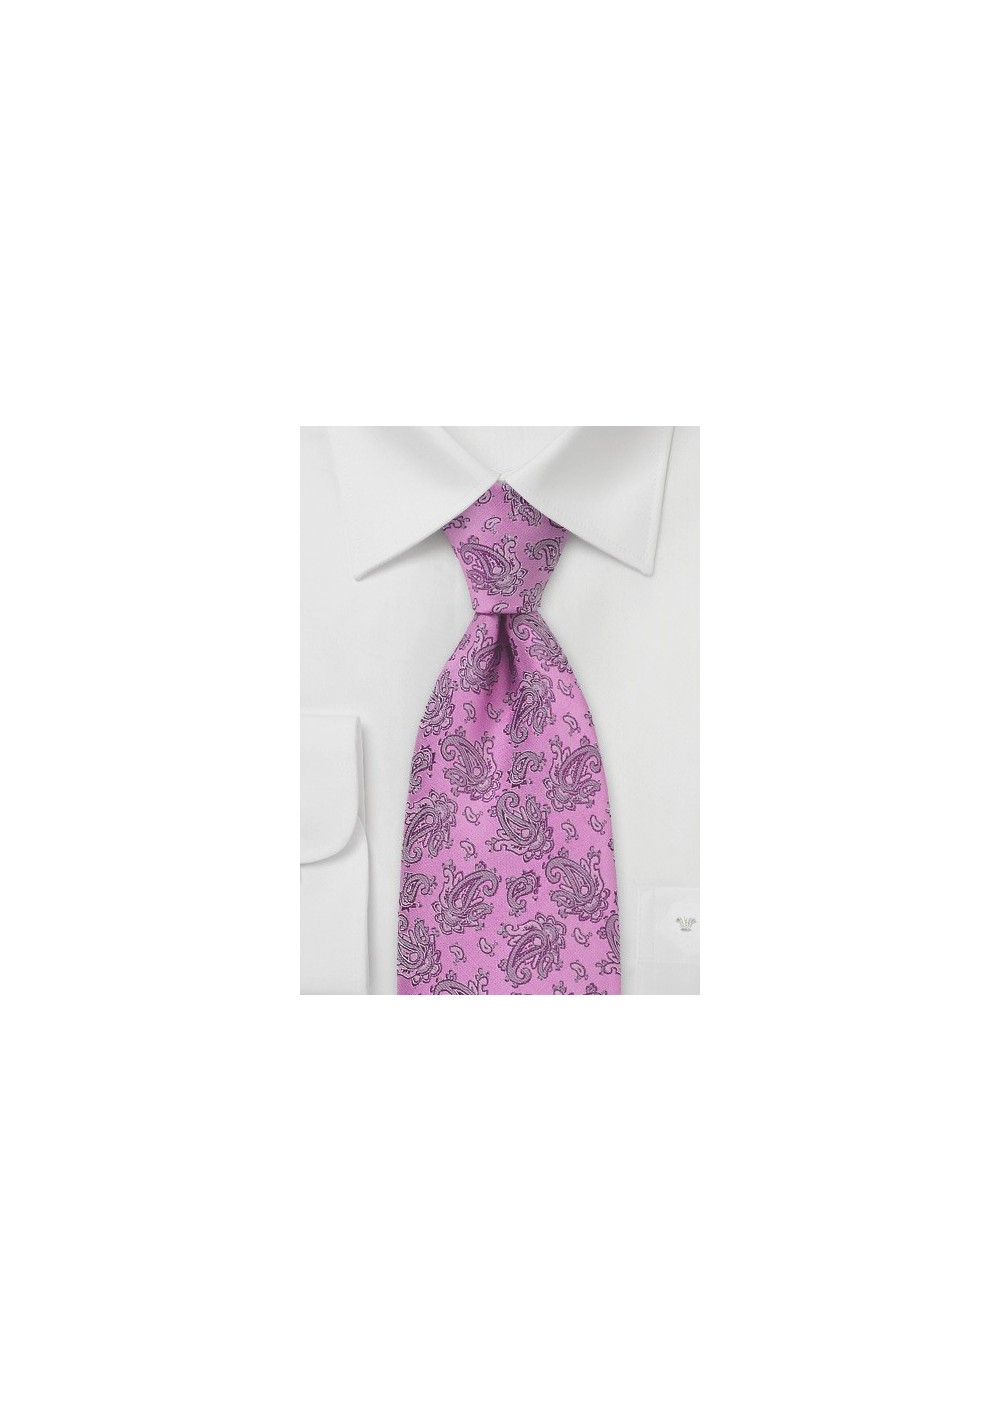 Starburst Pink Paisley Tie